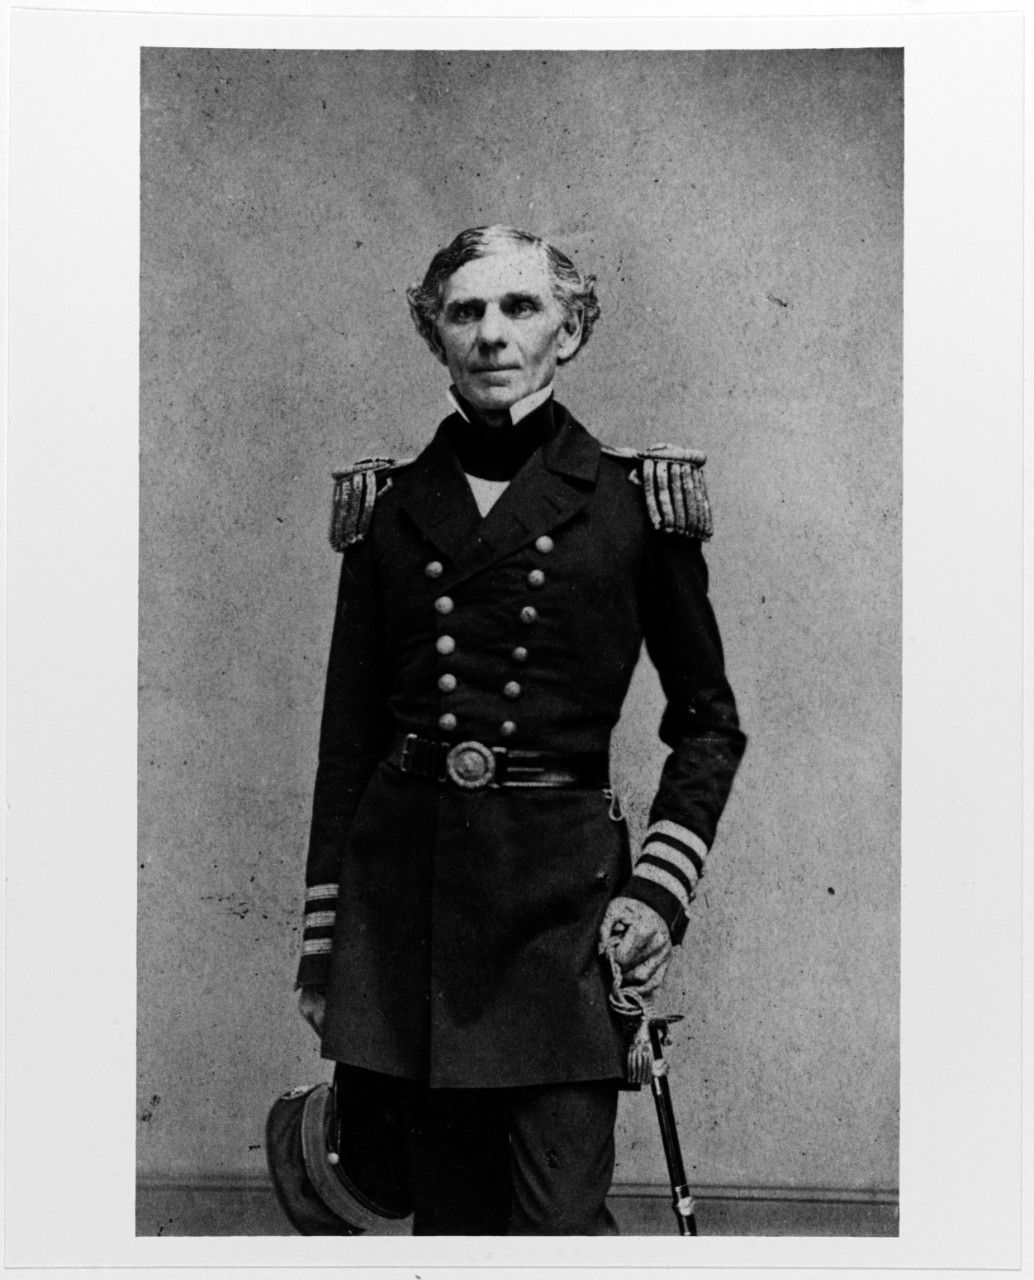 Captain Joseph B. Hull, USN